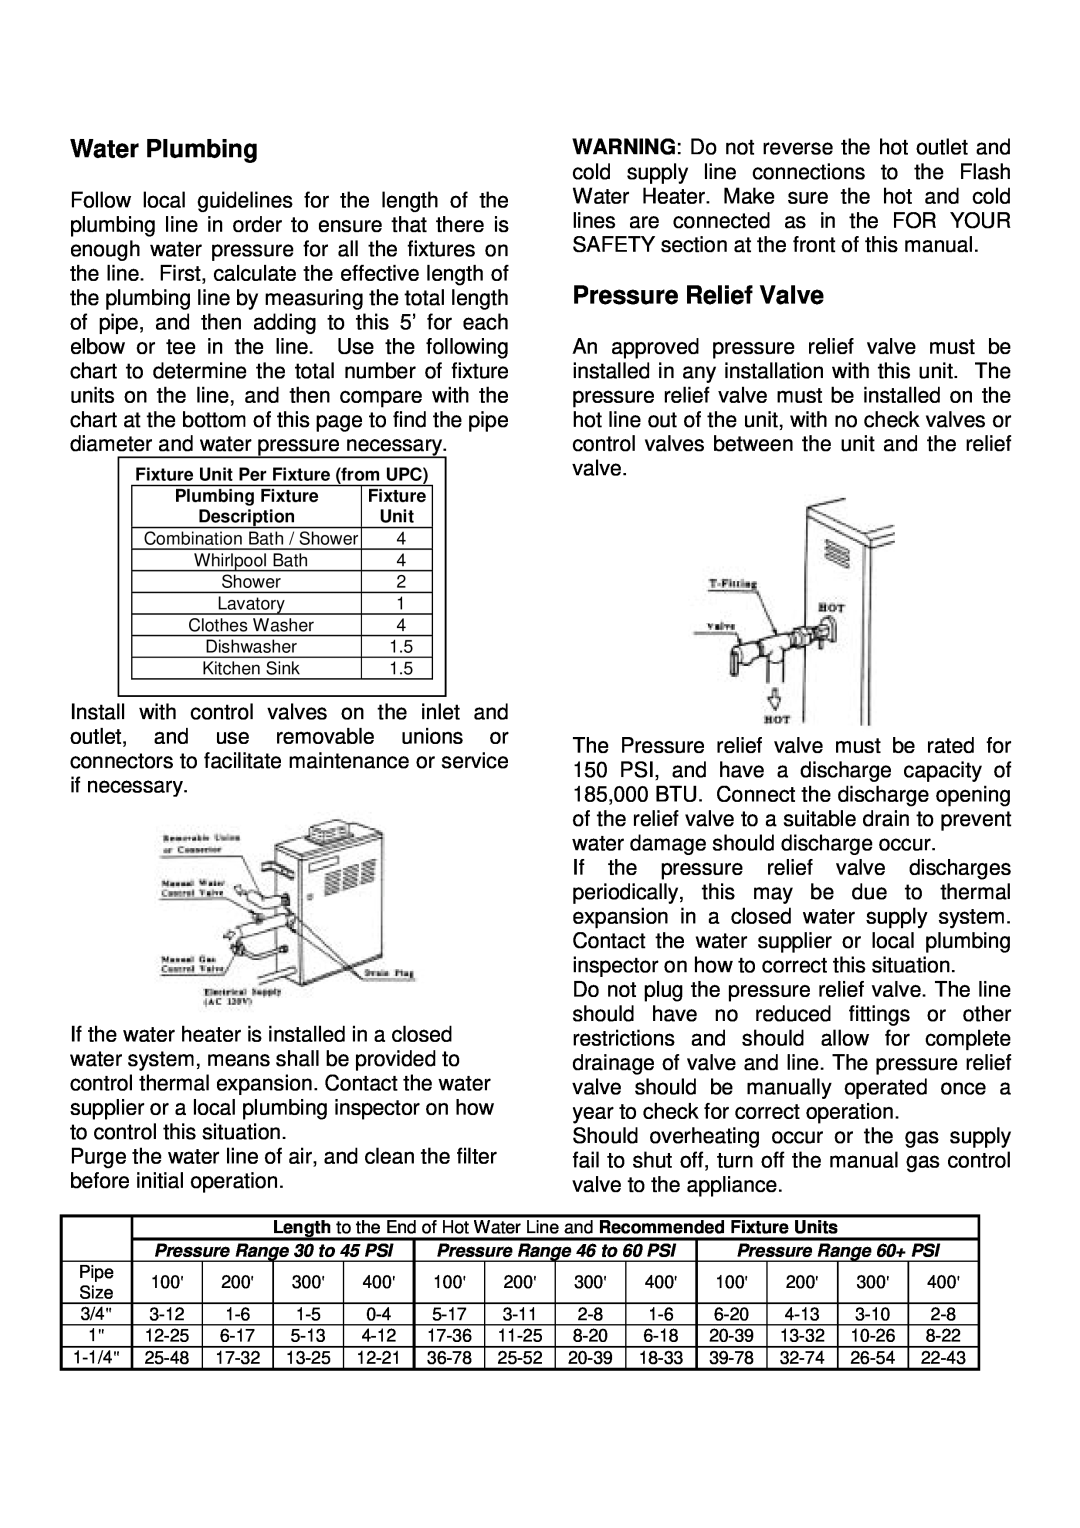 Whirlpool T-K2 installation manual Water Plumbing, Pressure Relief Valve, Fixture Unit Per Fixture from UPC, Description 